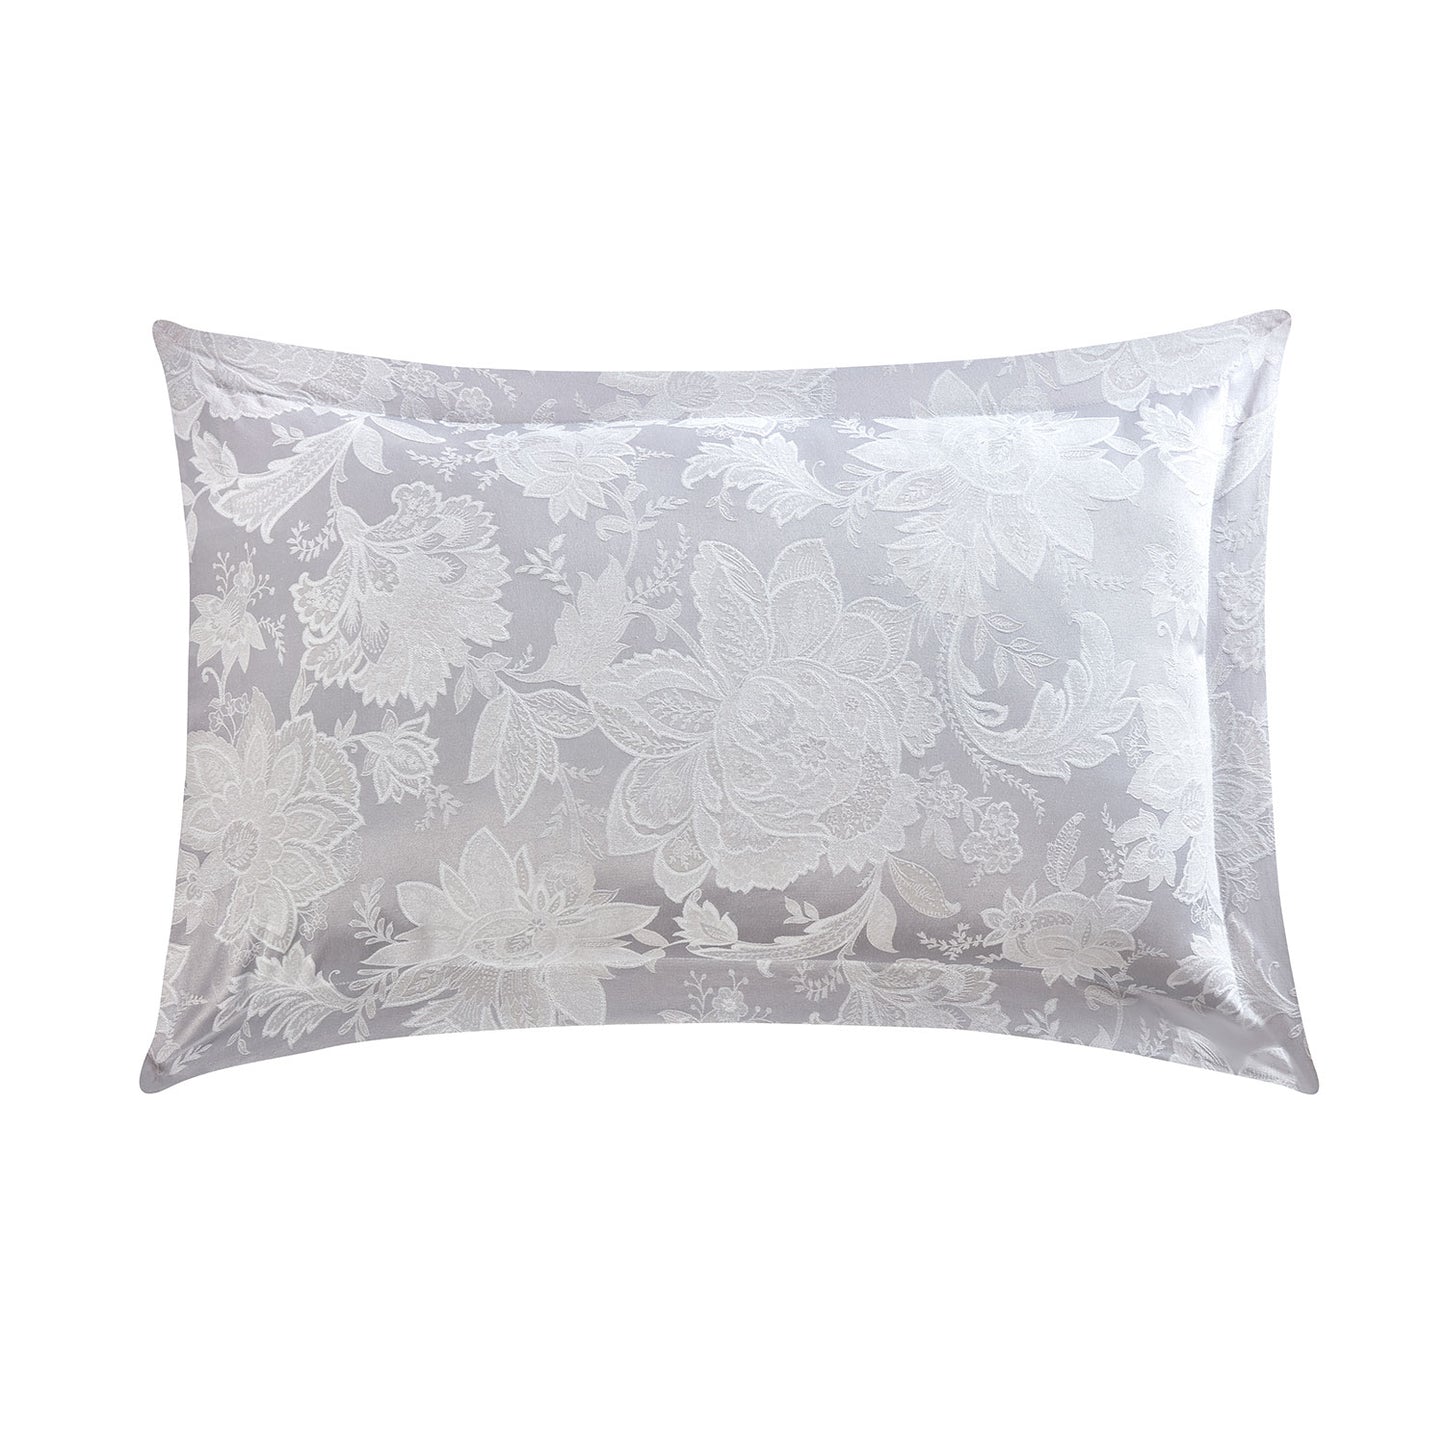 Florentine Silver Jacquard Oxford Pillowcases (Pair)